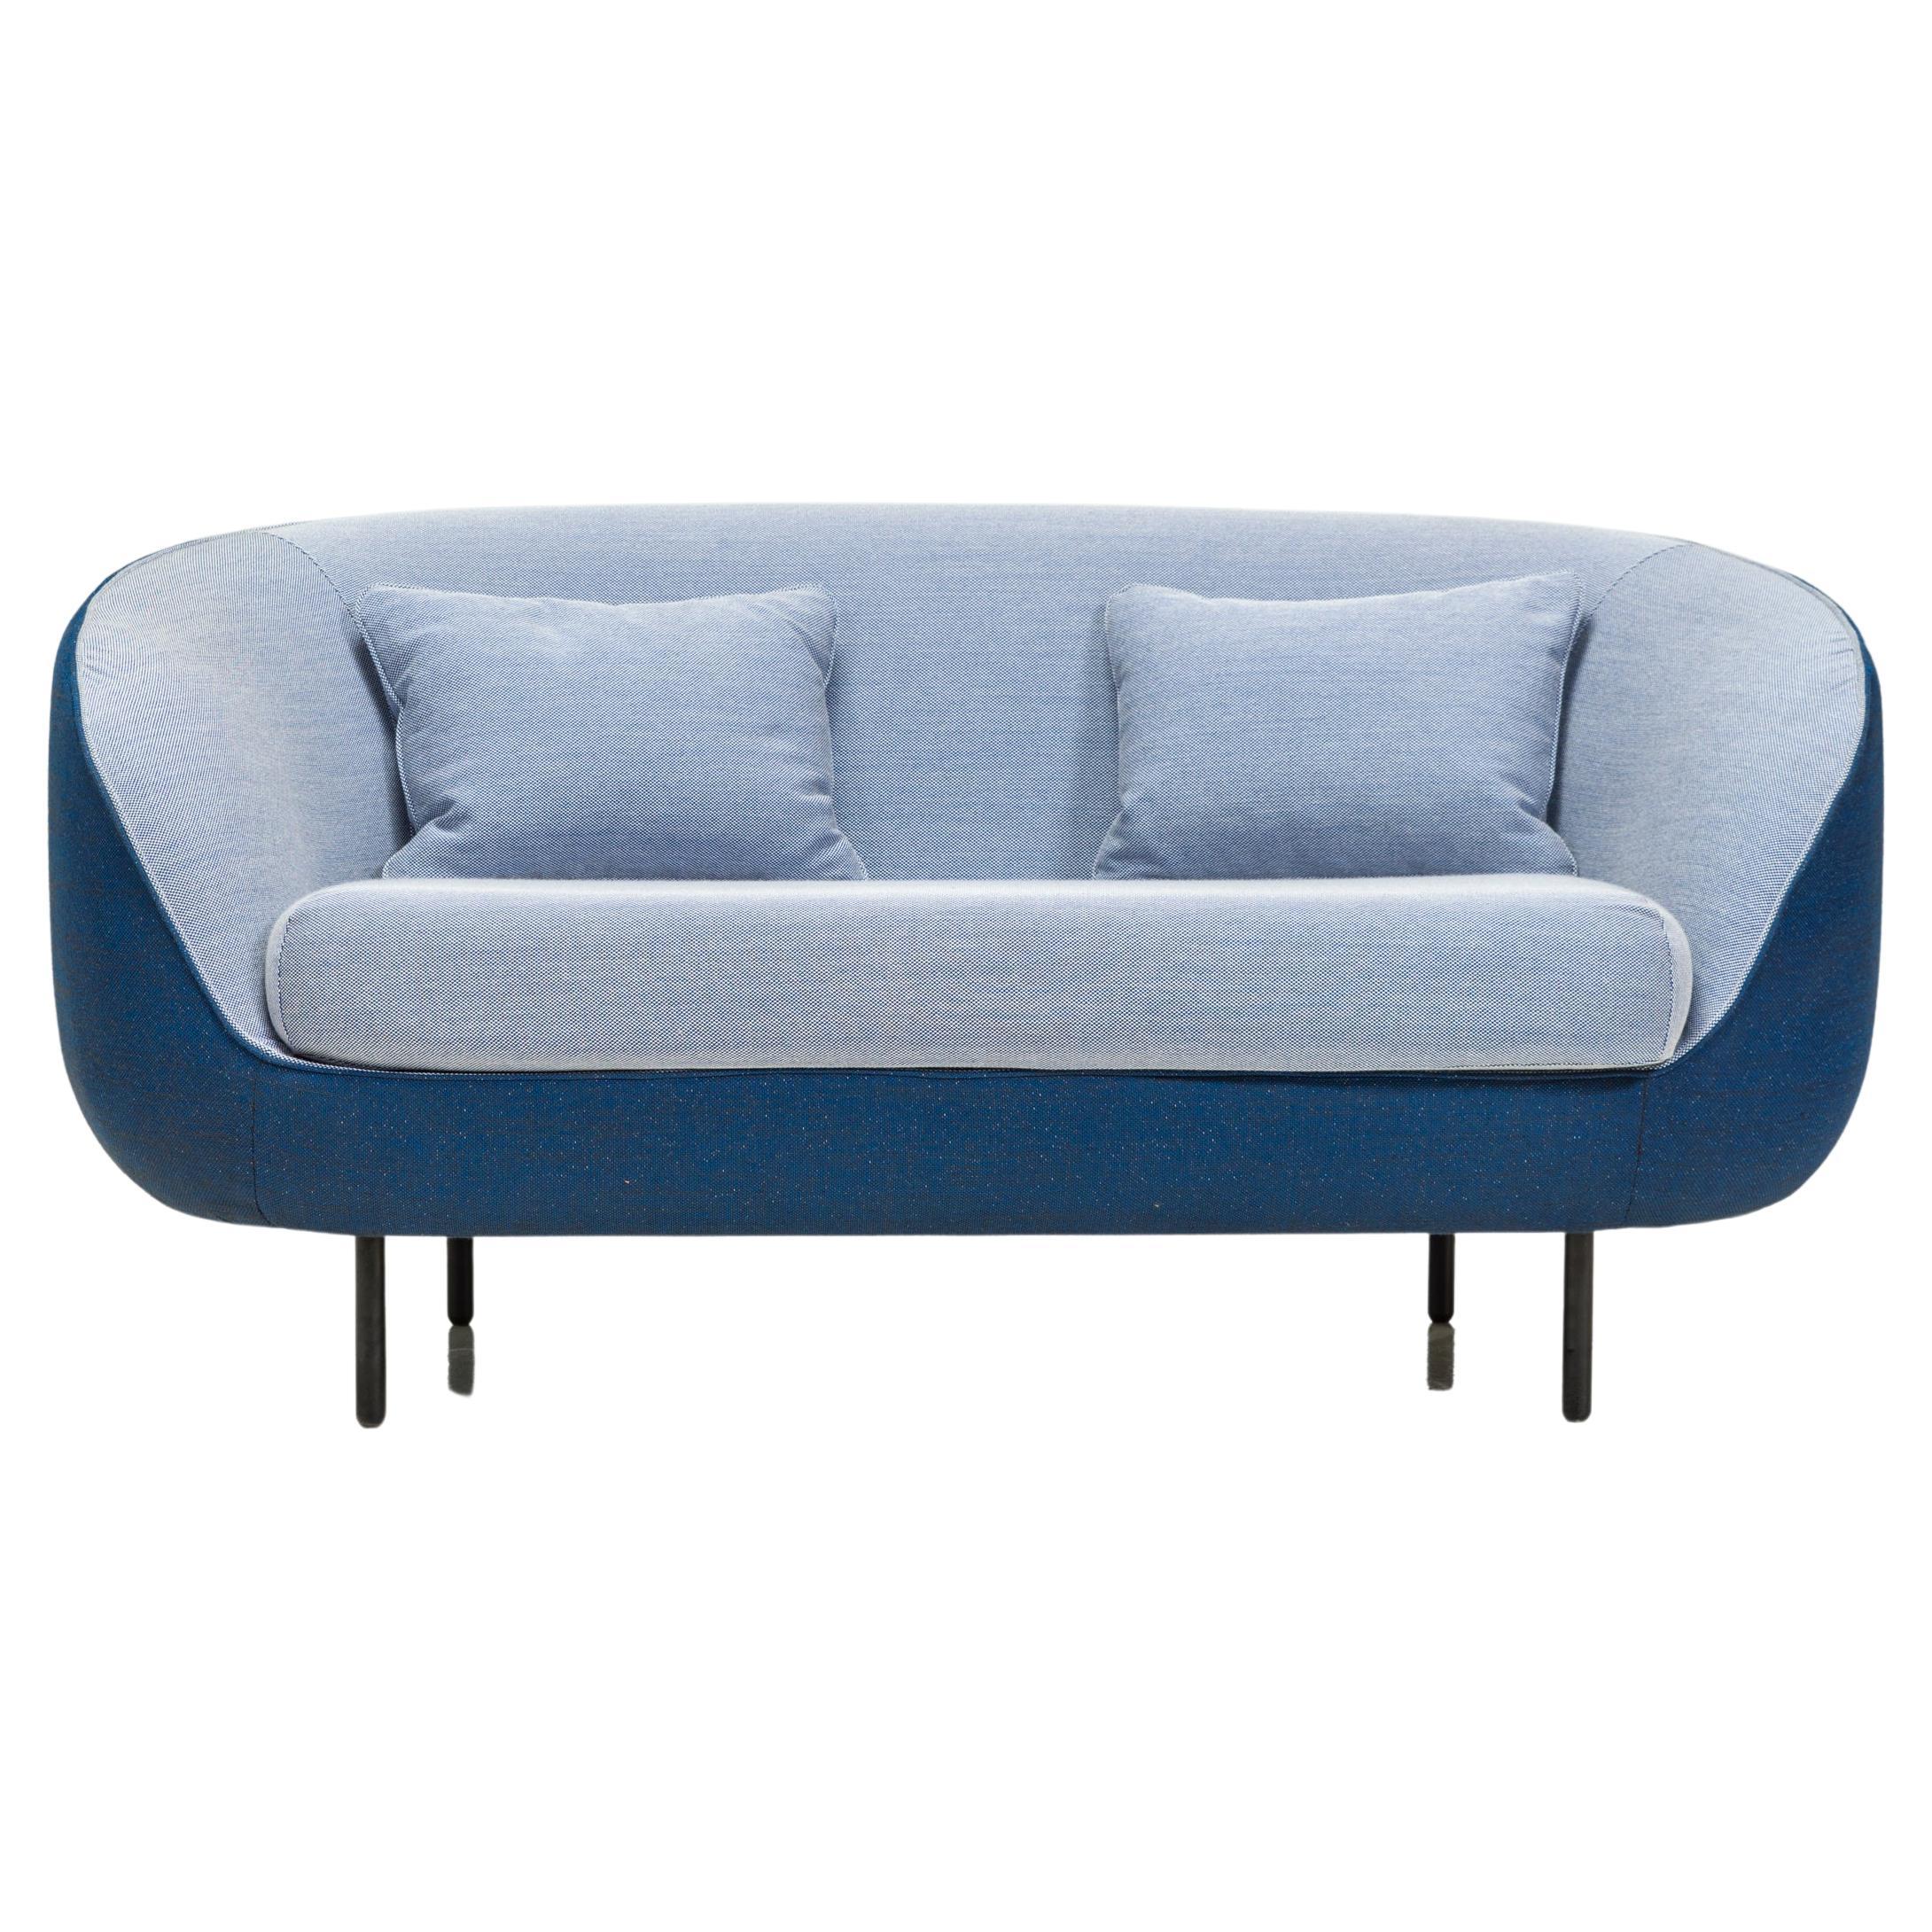 Fredericia by GamFratesi Two Tone Blue Fabric Haiku 2 Seater Sofa, 2018